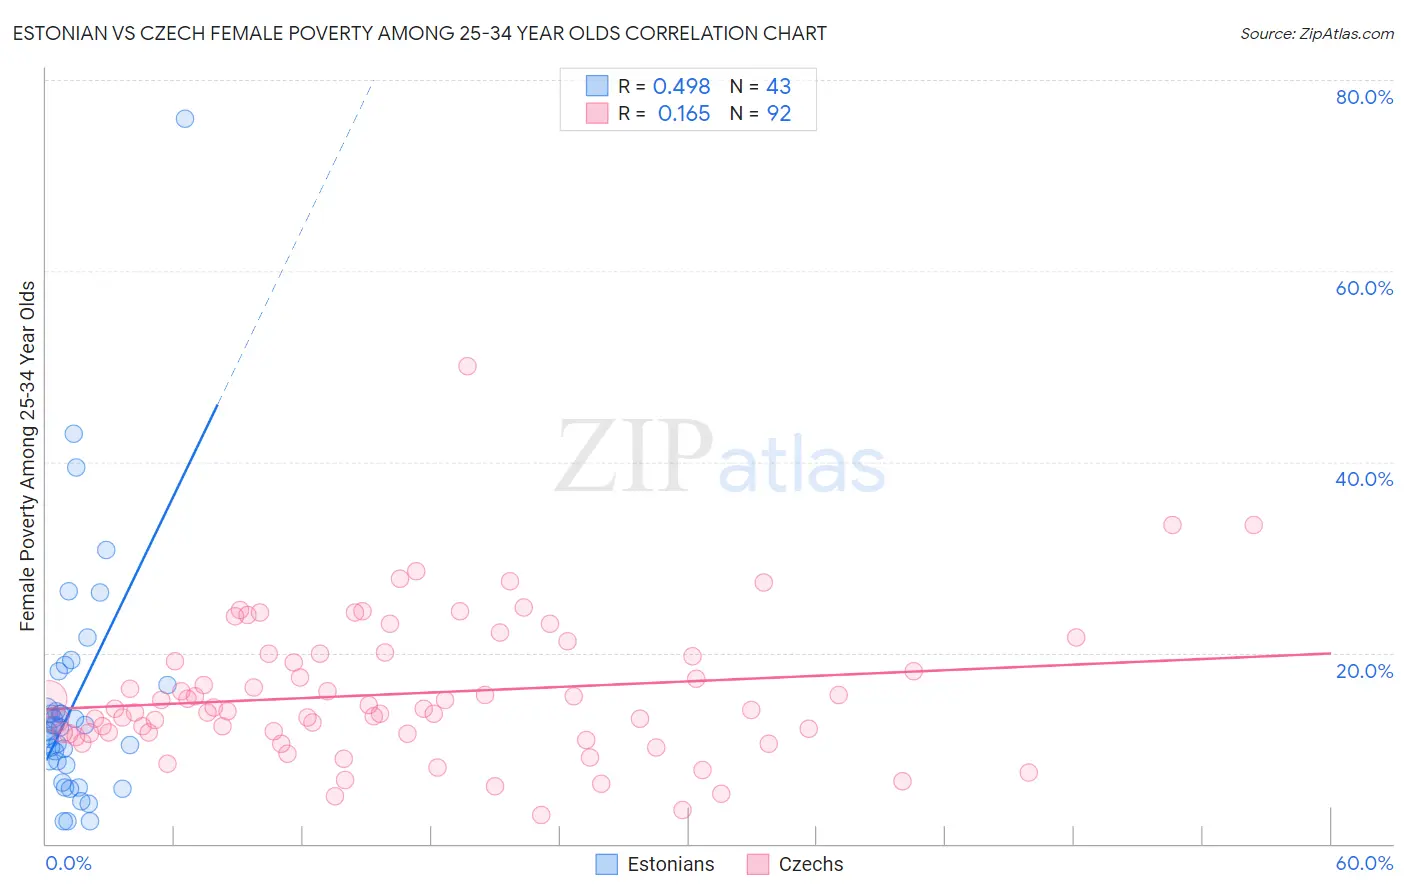 Estonian vs Czech Female Poverty Among 25-34 Year Olds